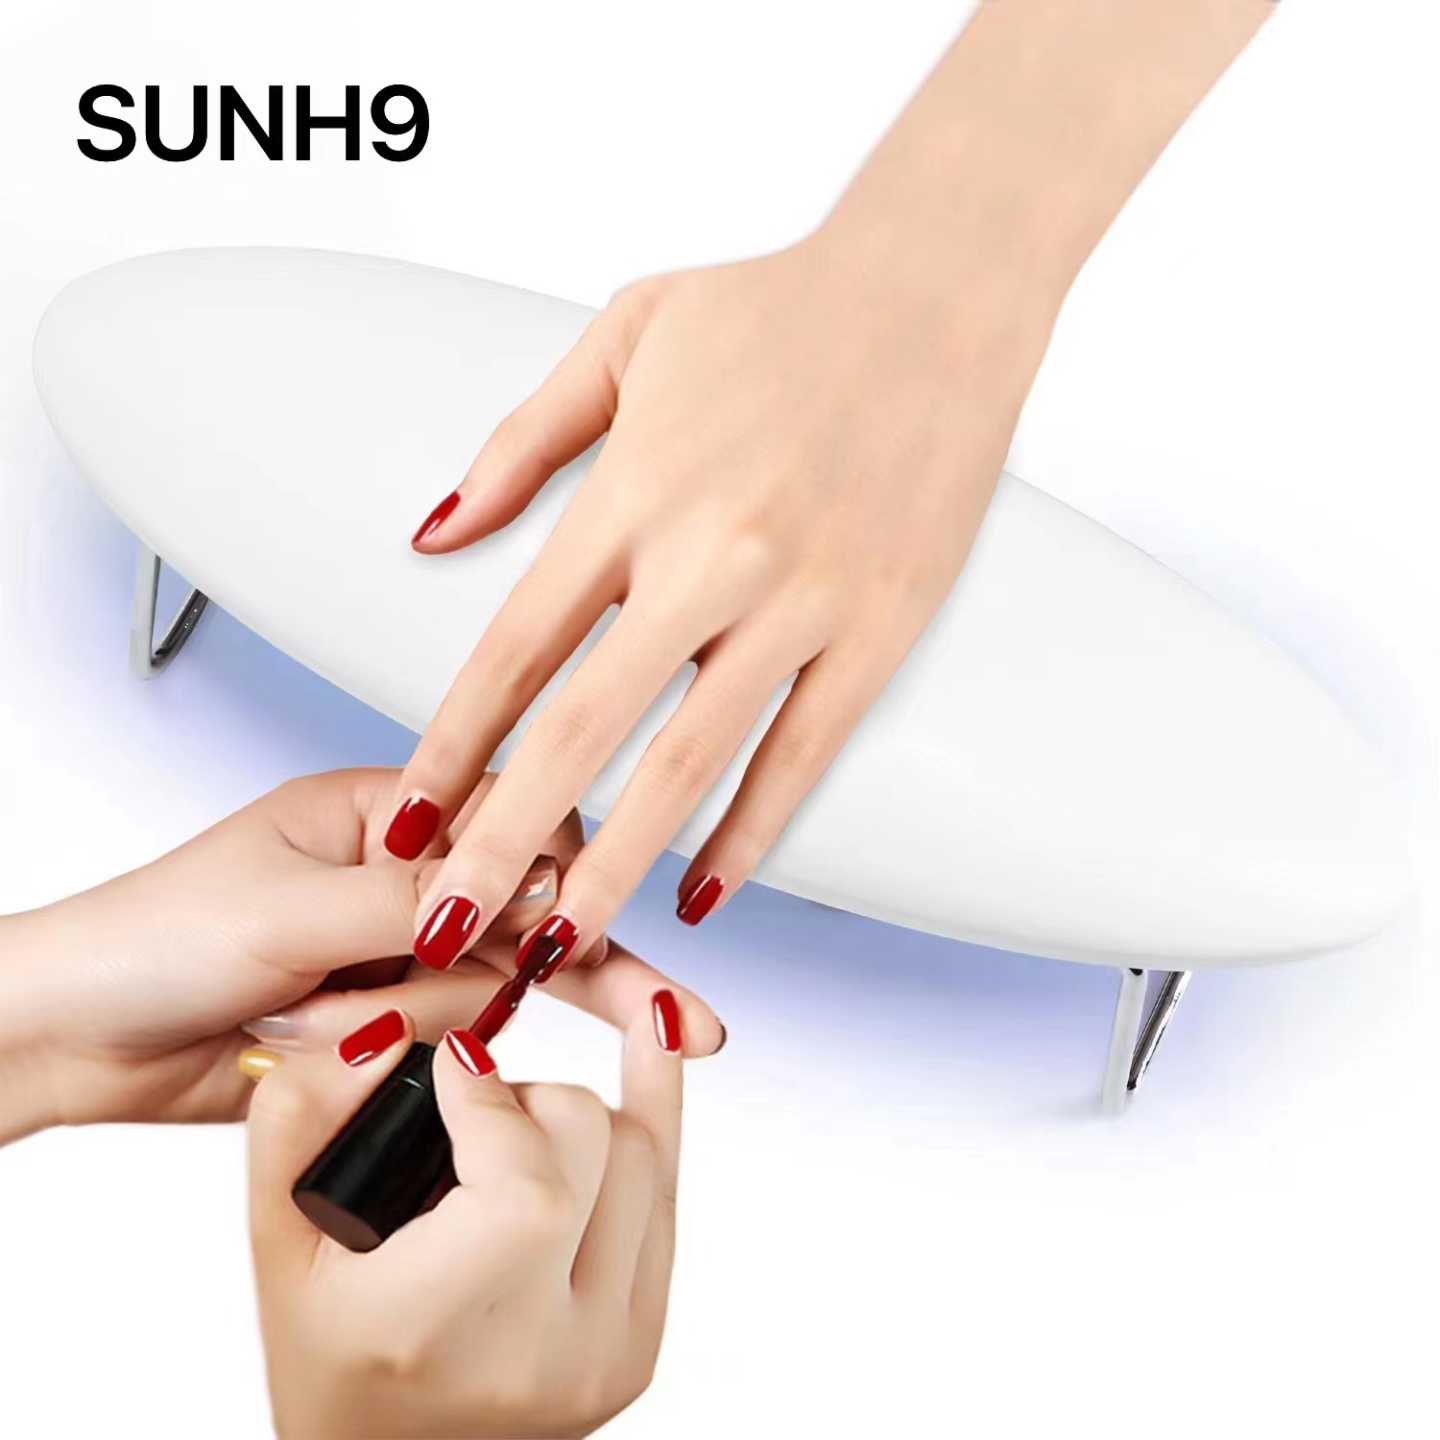 Professional manicure hand rest - Arm rest manicure - VKN-SUNH9 - 582426